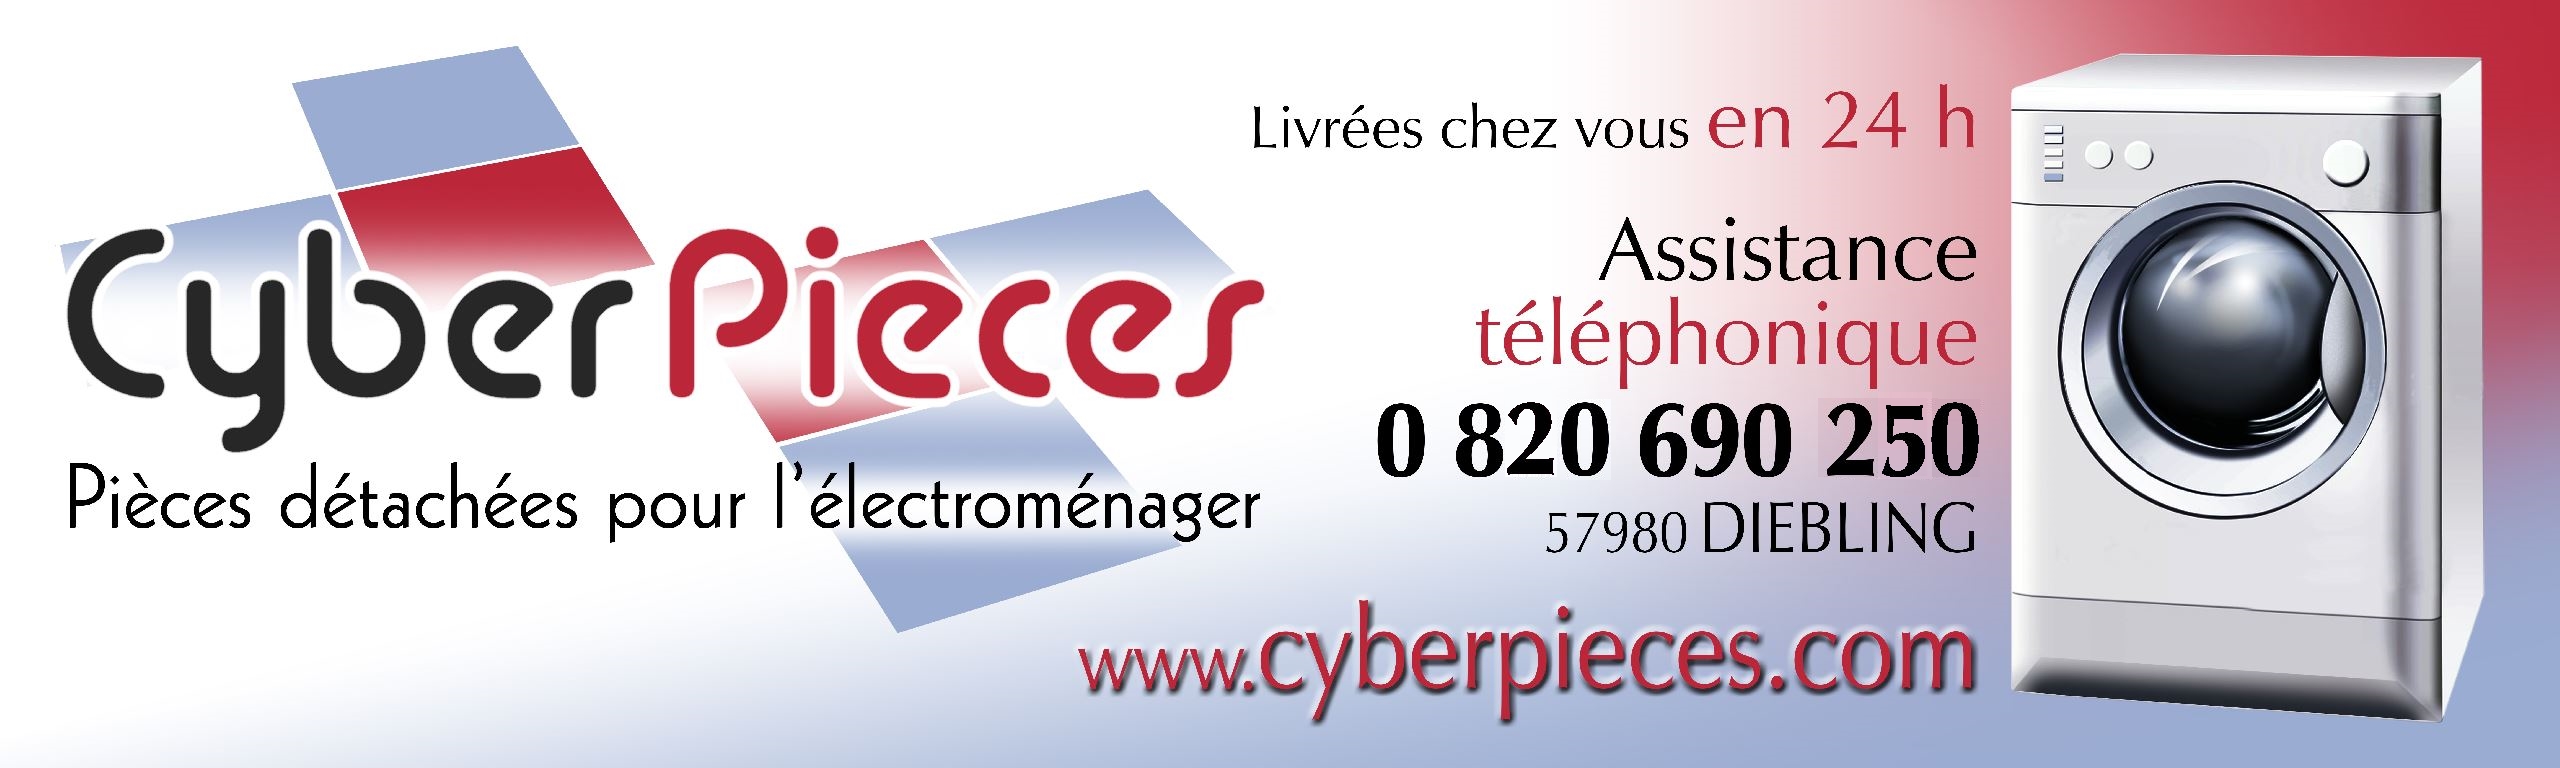 cyberpieces-banderolle-2560x770.jpg